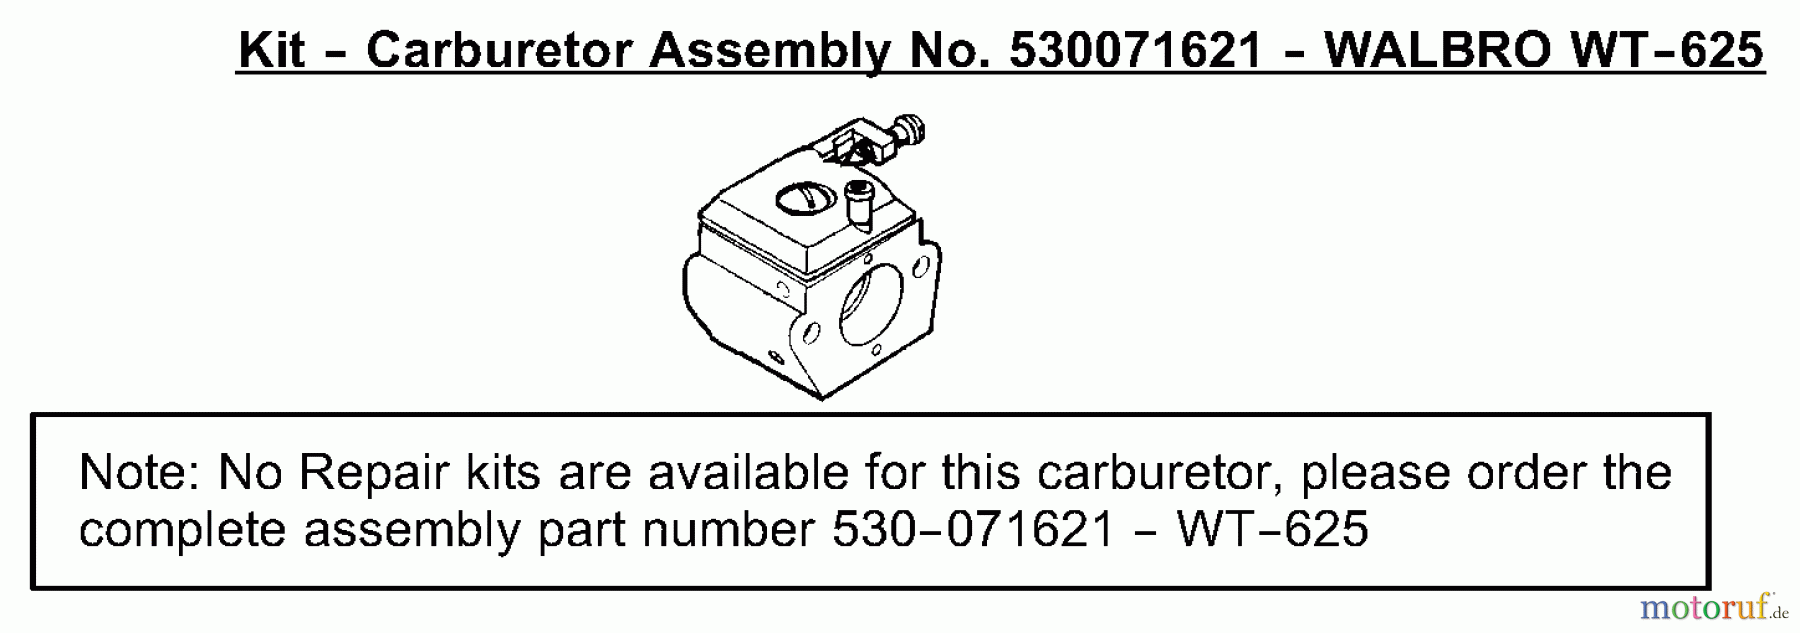  Poulan / Weed Eater Motorsägen PP221 (Type 3) - Poulan Pro Chainsaw Carburetor Assembly (Walbro WT625) 530071621